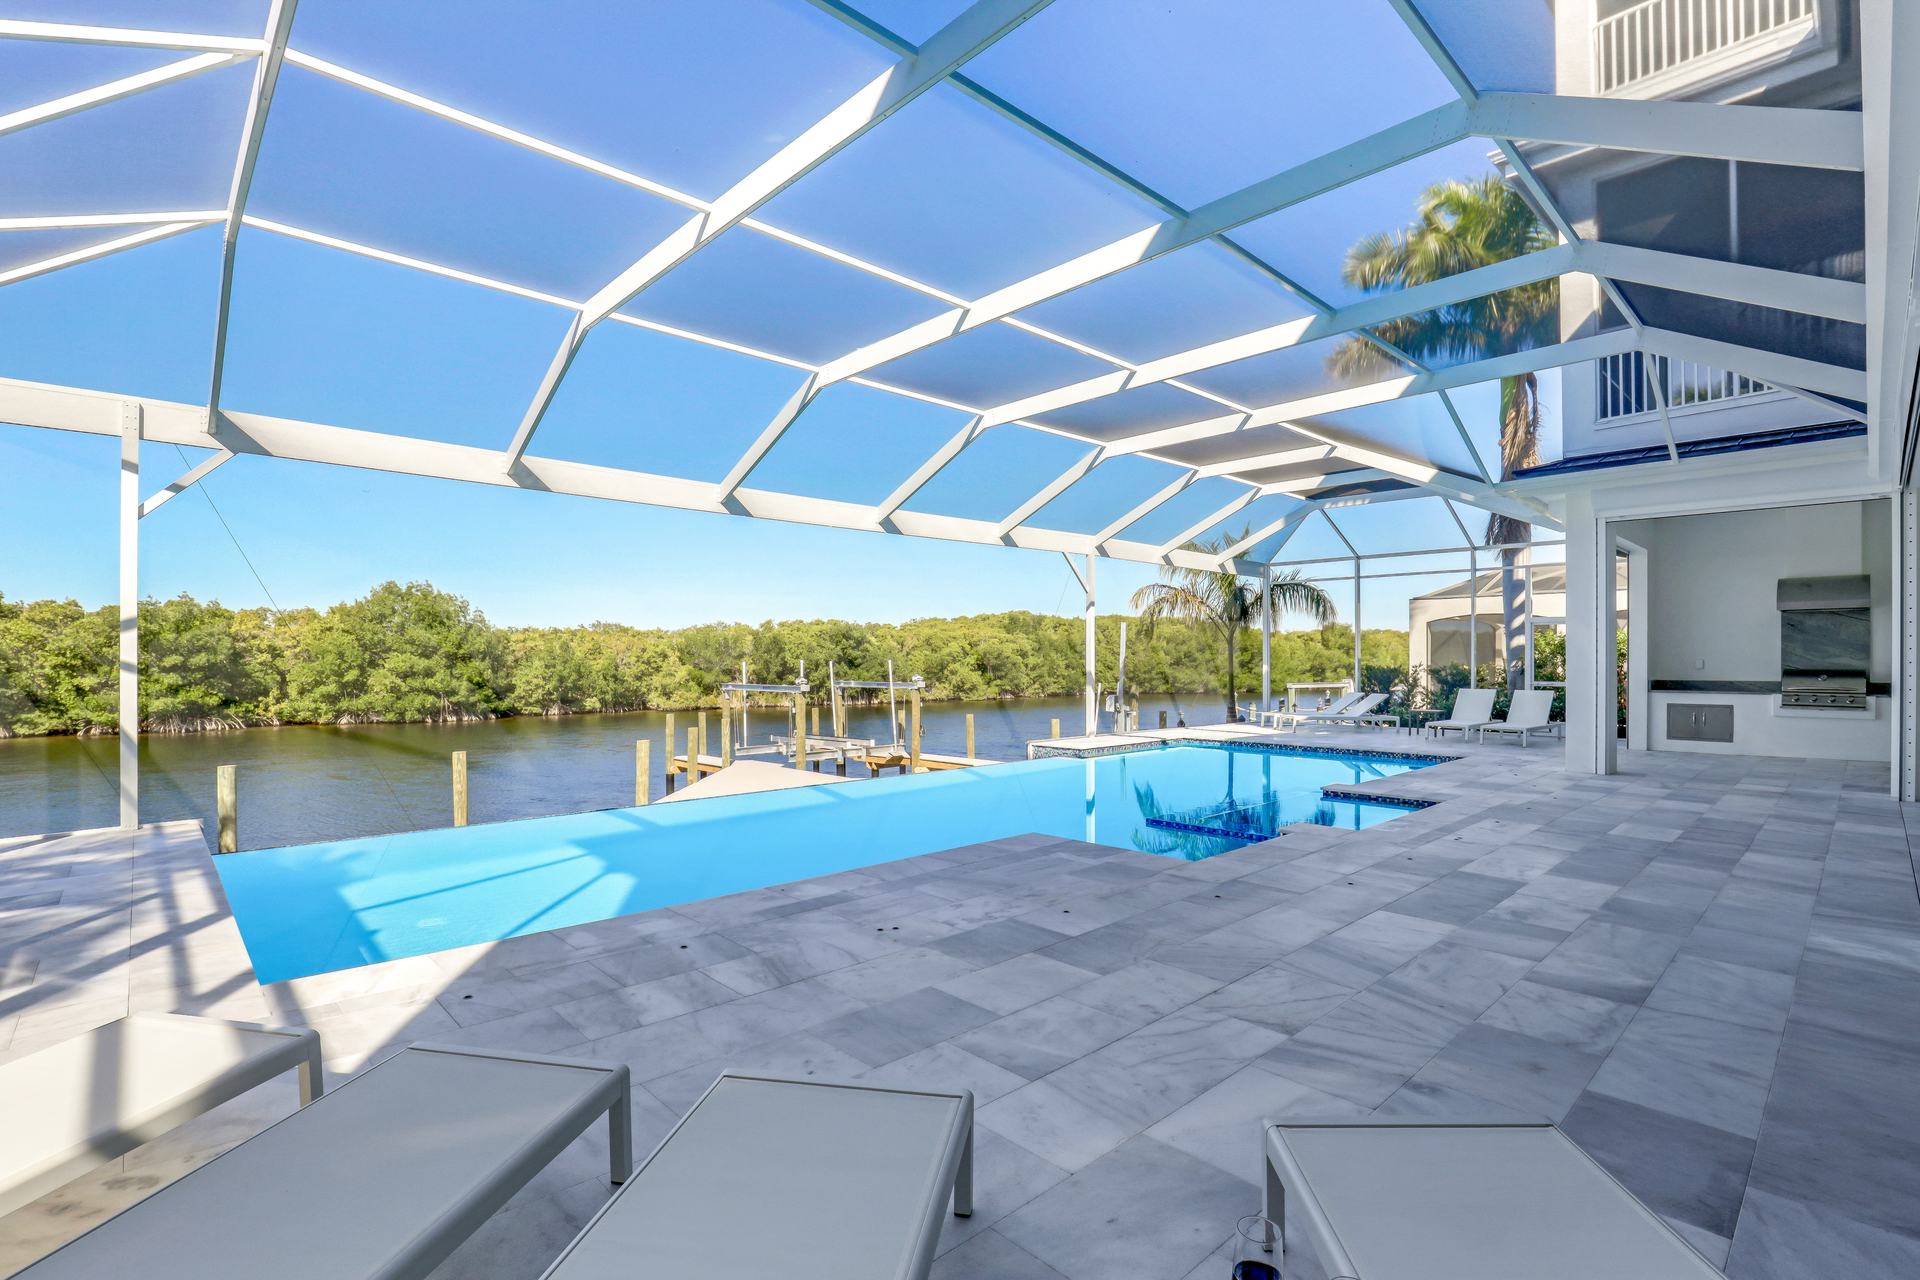 Pool area in Florida